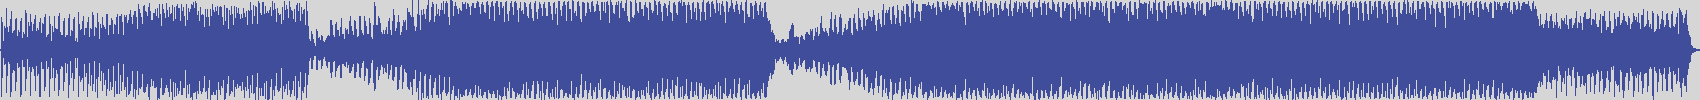 nf_boyz_records [NFY067] Pseudo Nose - Rad Authority [Antika's Progression Mix] audio wave form